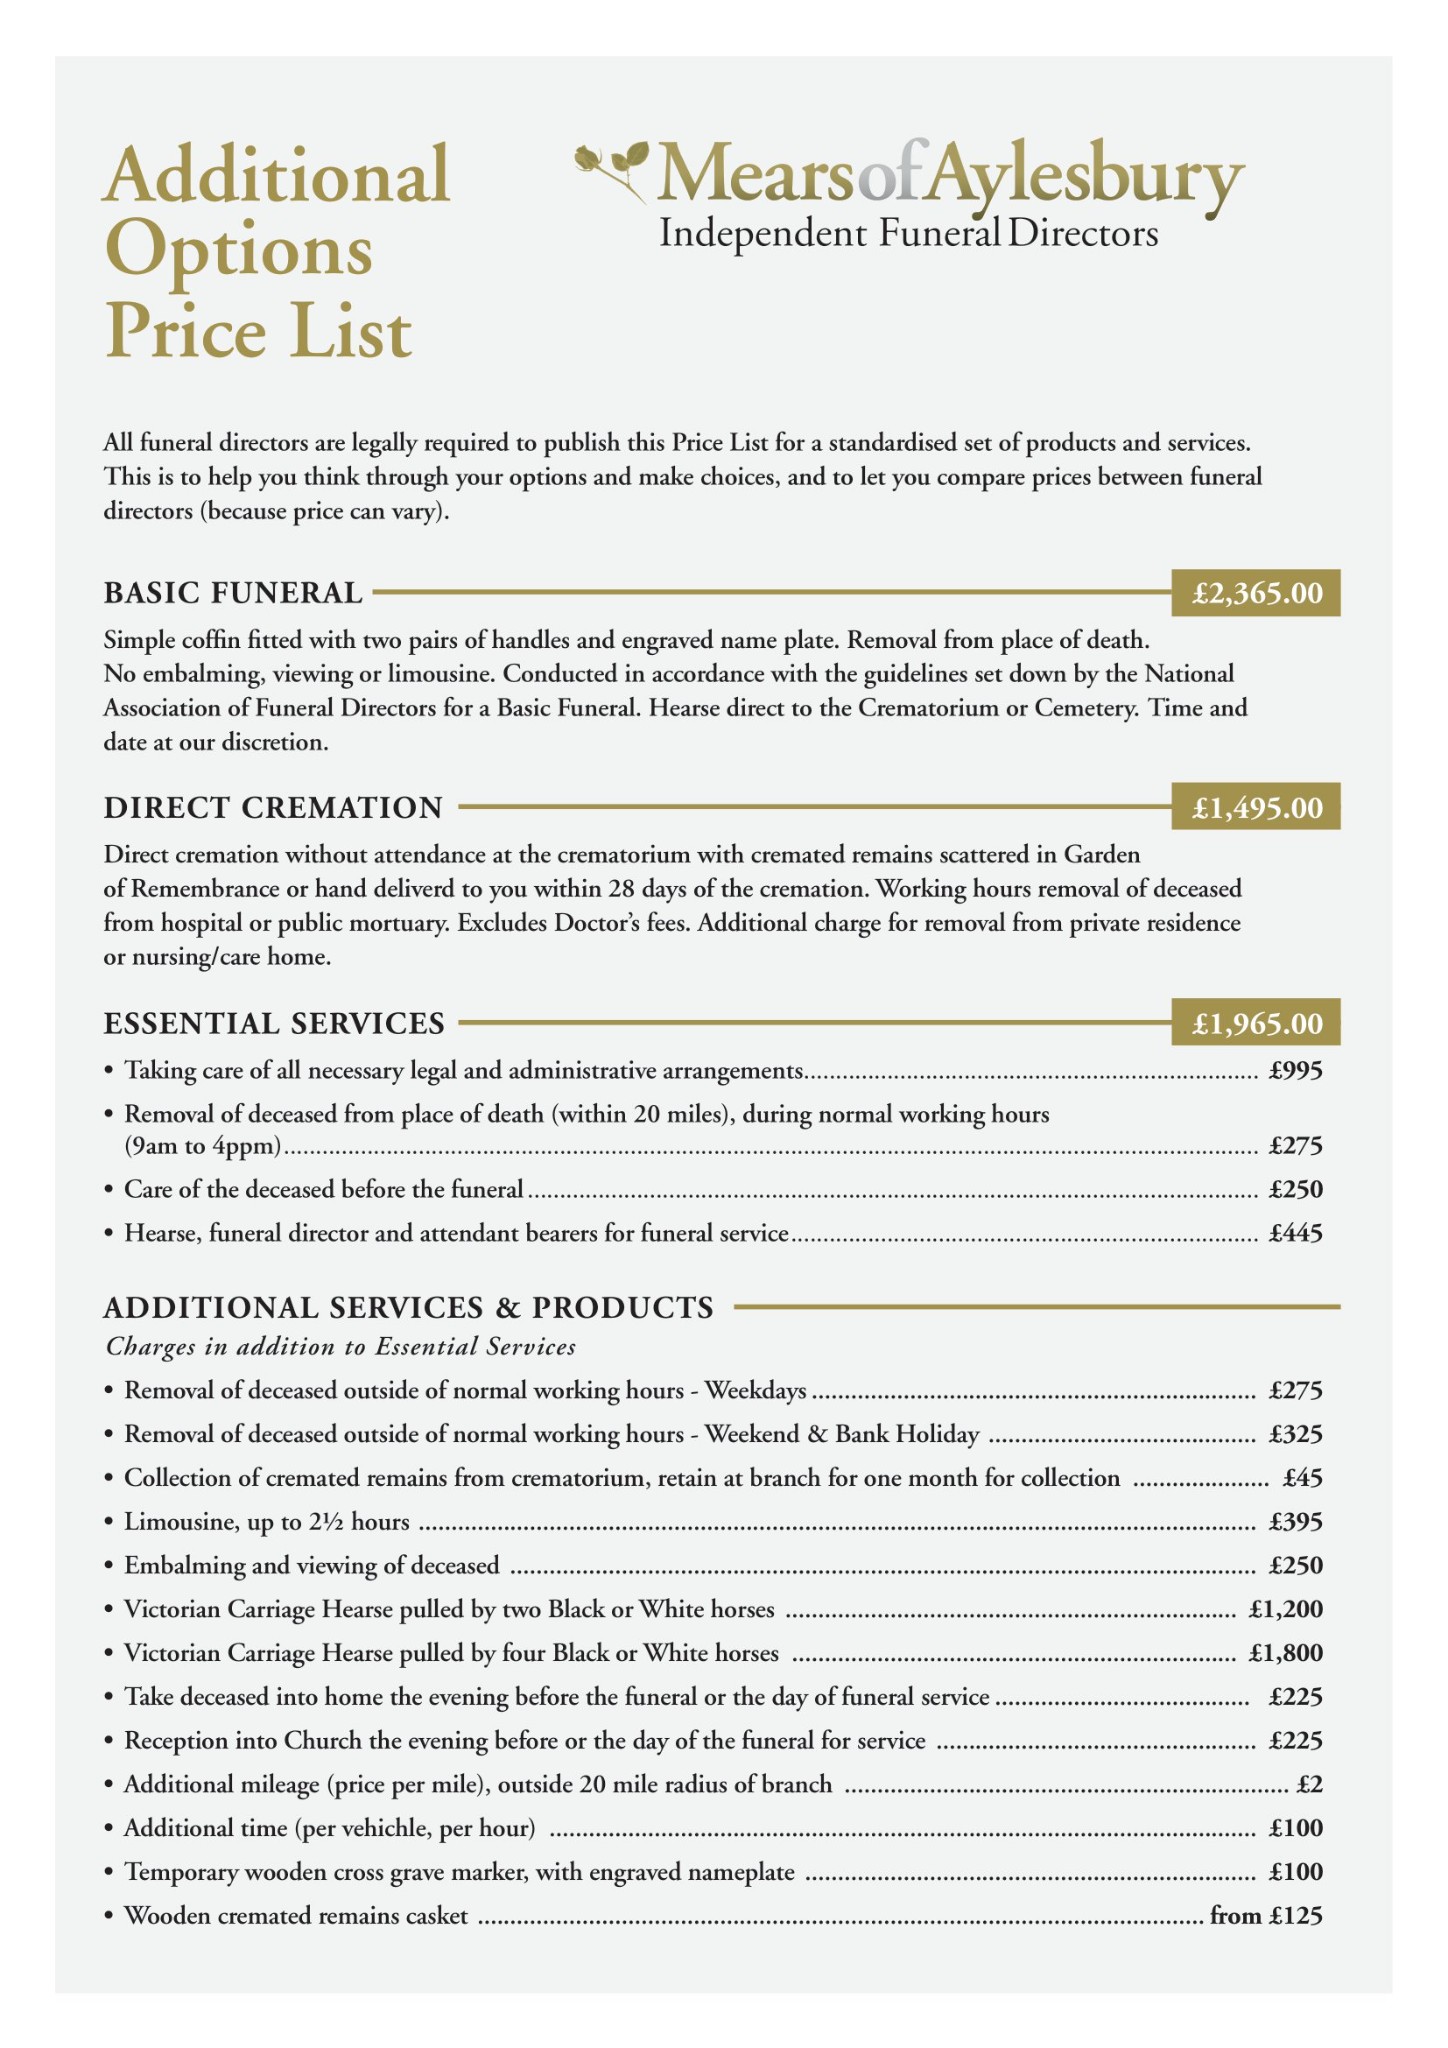 mff-cma-additional-options-price-list_aylesbury_feb24-1